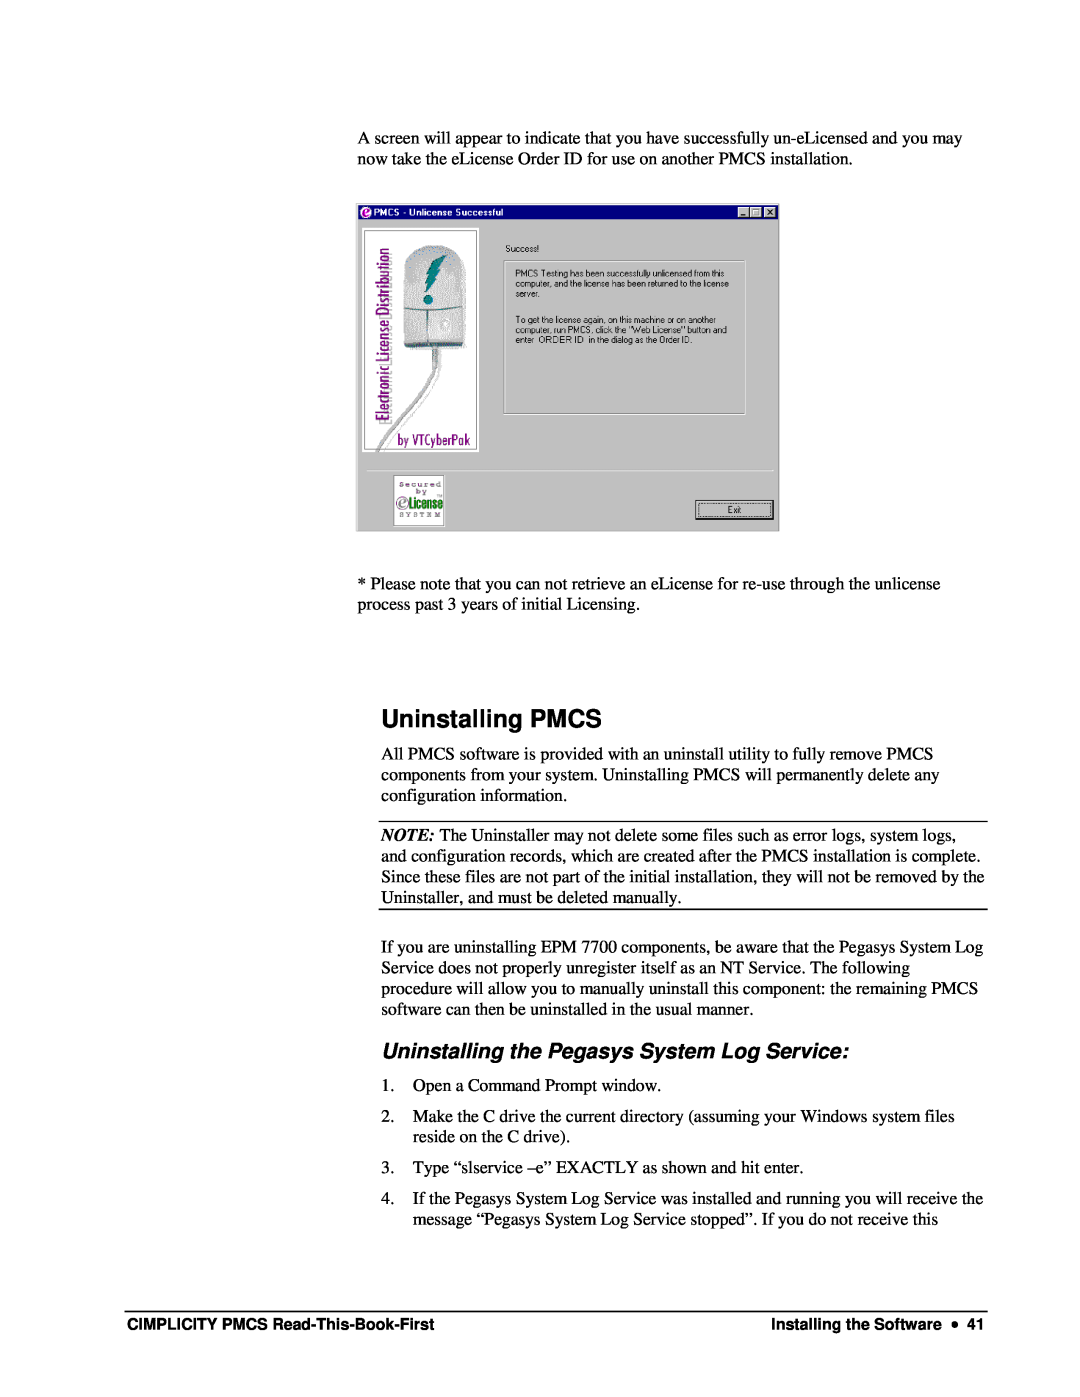 GE DEH-211 manual Uninstalling PMCS, Uninstalling the Pegasys System Log Service 